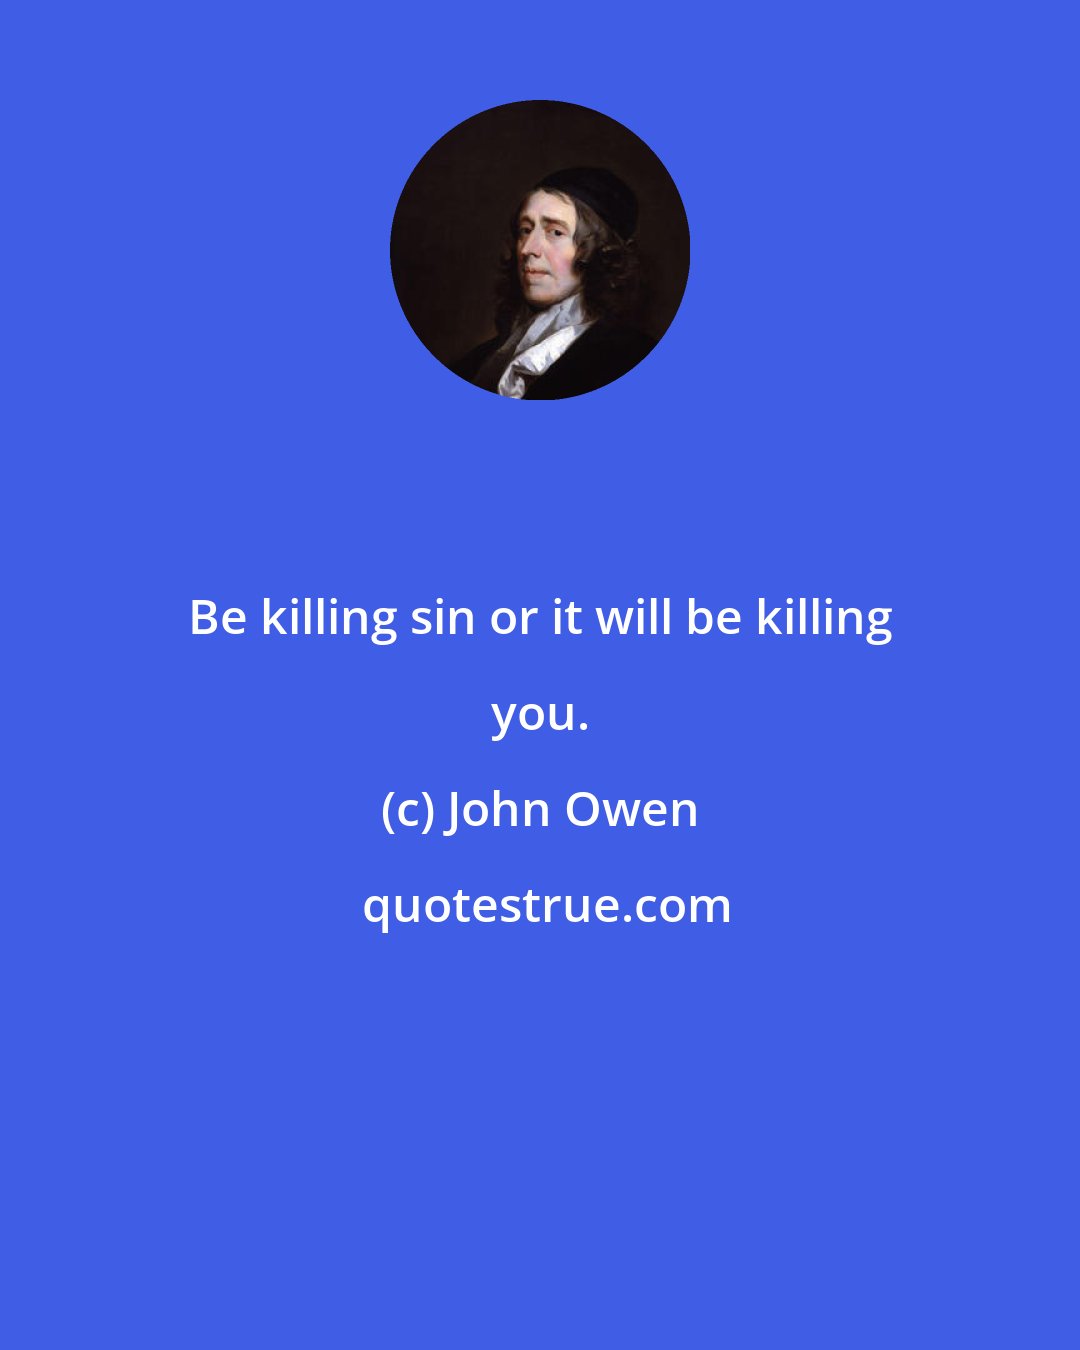 John Owen: Be killing sin or it will be killing you.